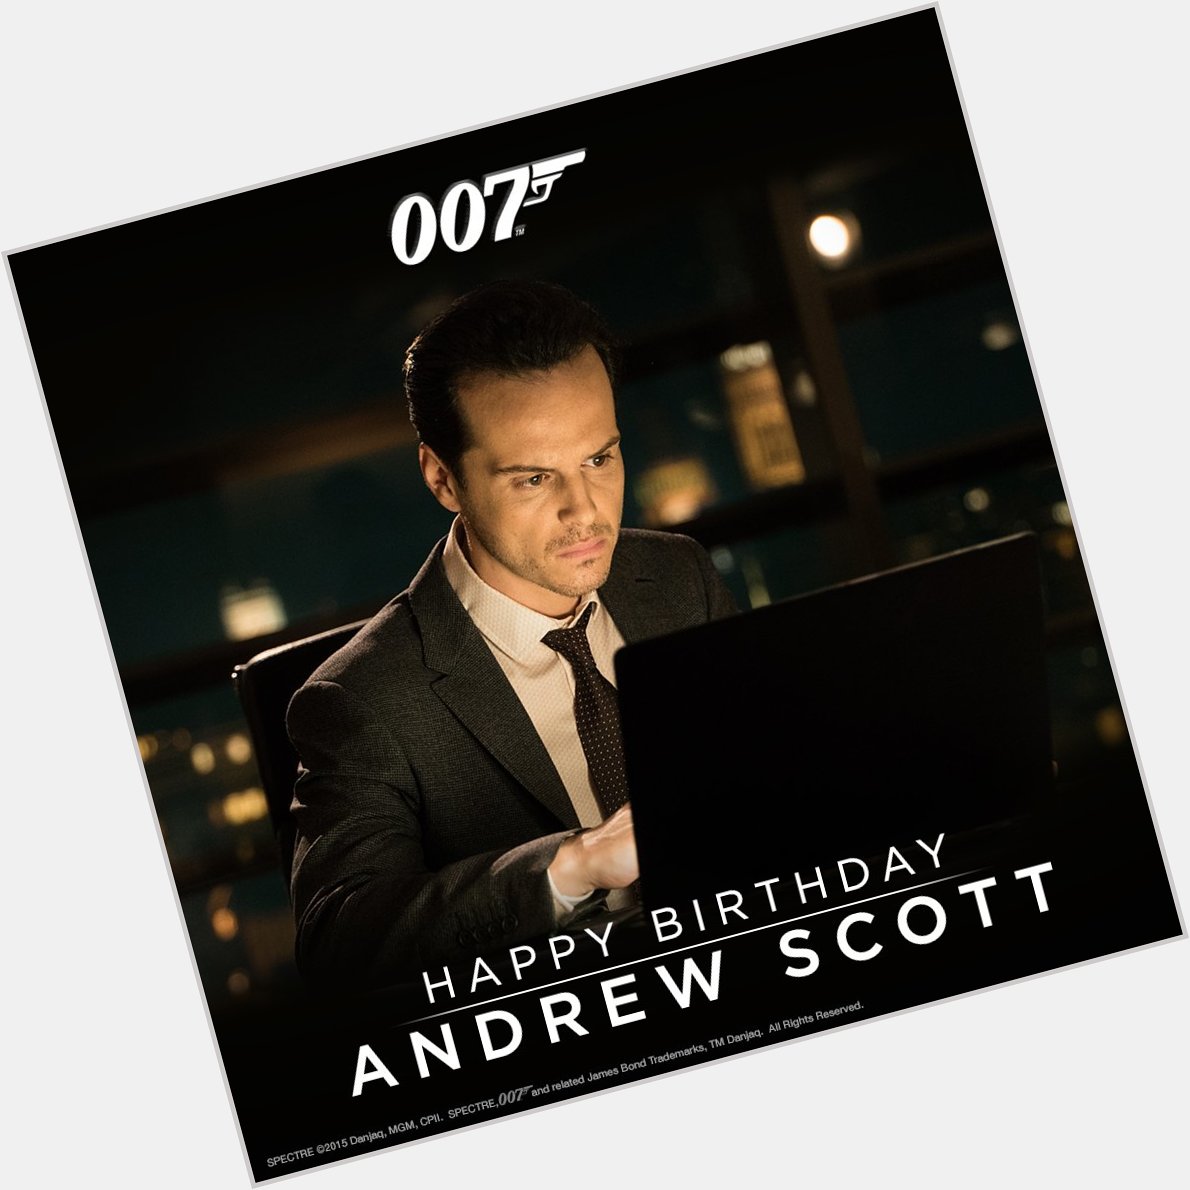 Happy birthday to Andrew Scott, who plays SPECTRE s Max Denbigh. 